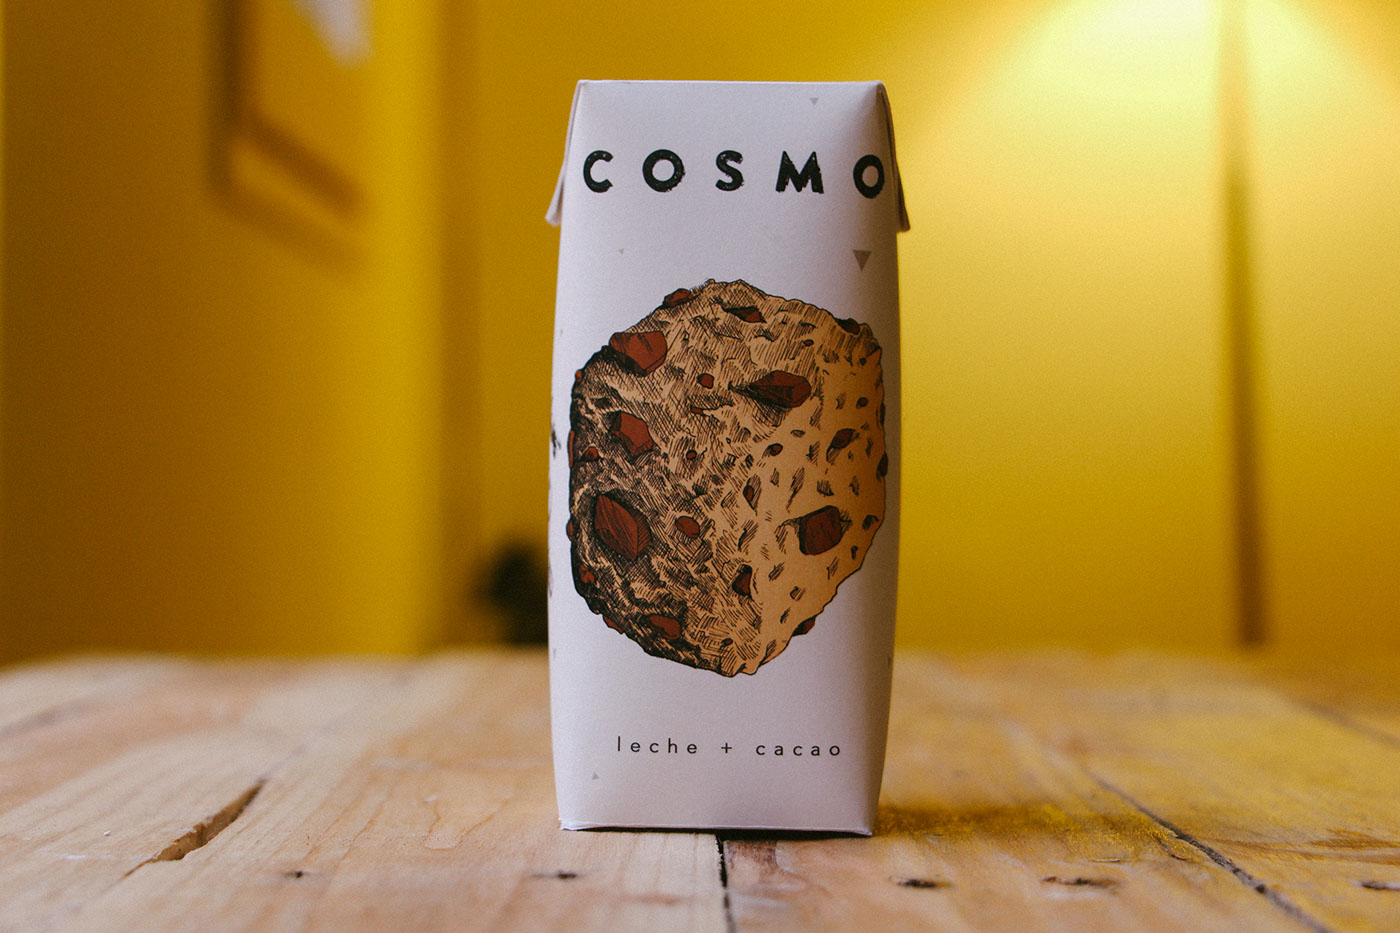 Space  nasa astronaut astronauts planet cosmos cosmo milkshake empaque Pack milk strawberry choco kiwi